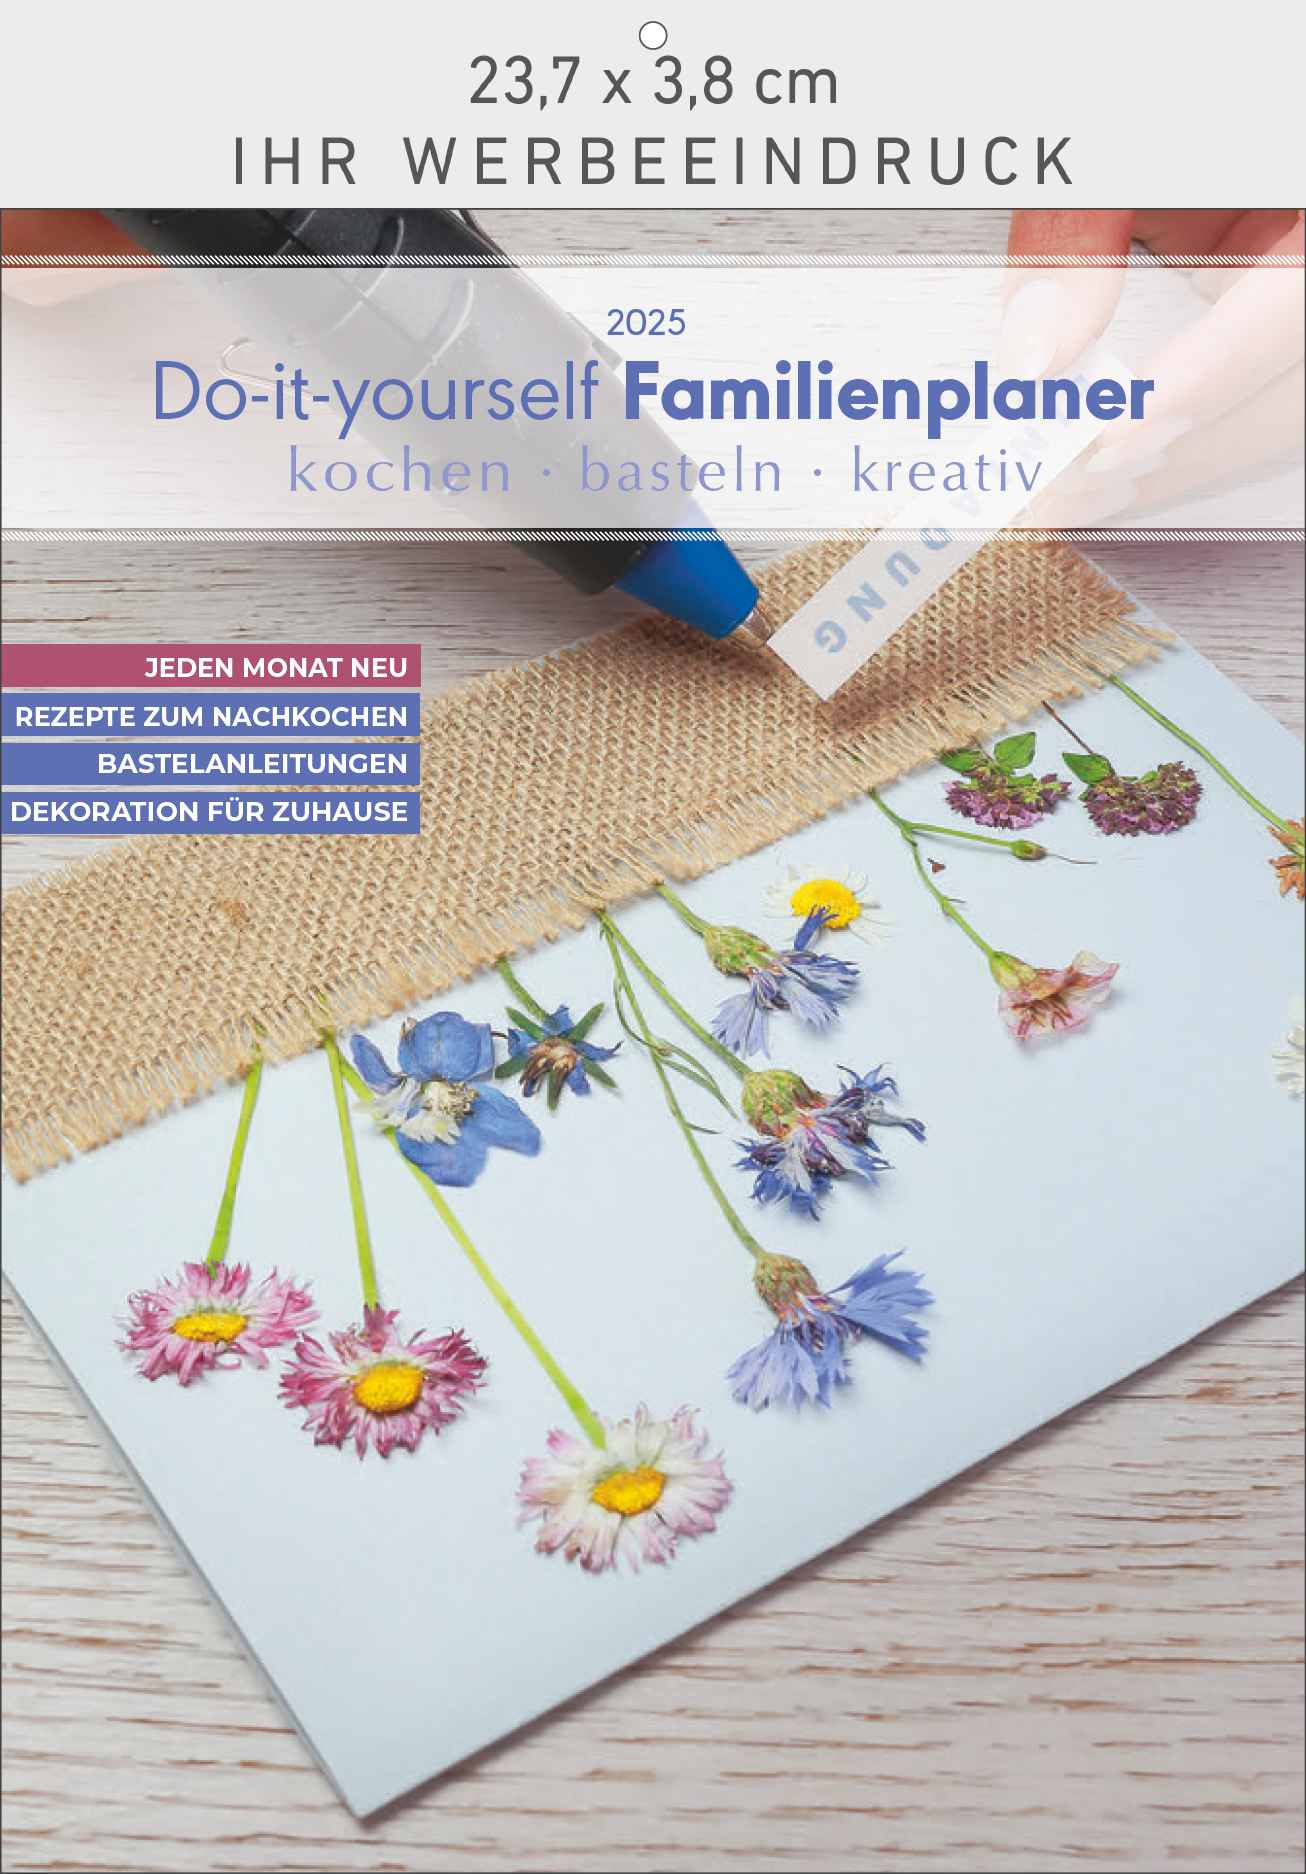 Der Do-it-yourself Familienplaner